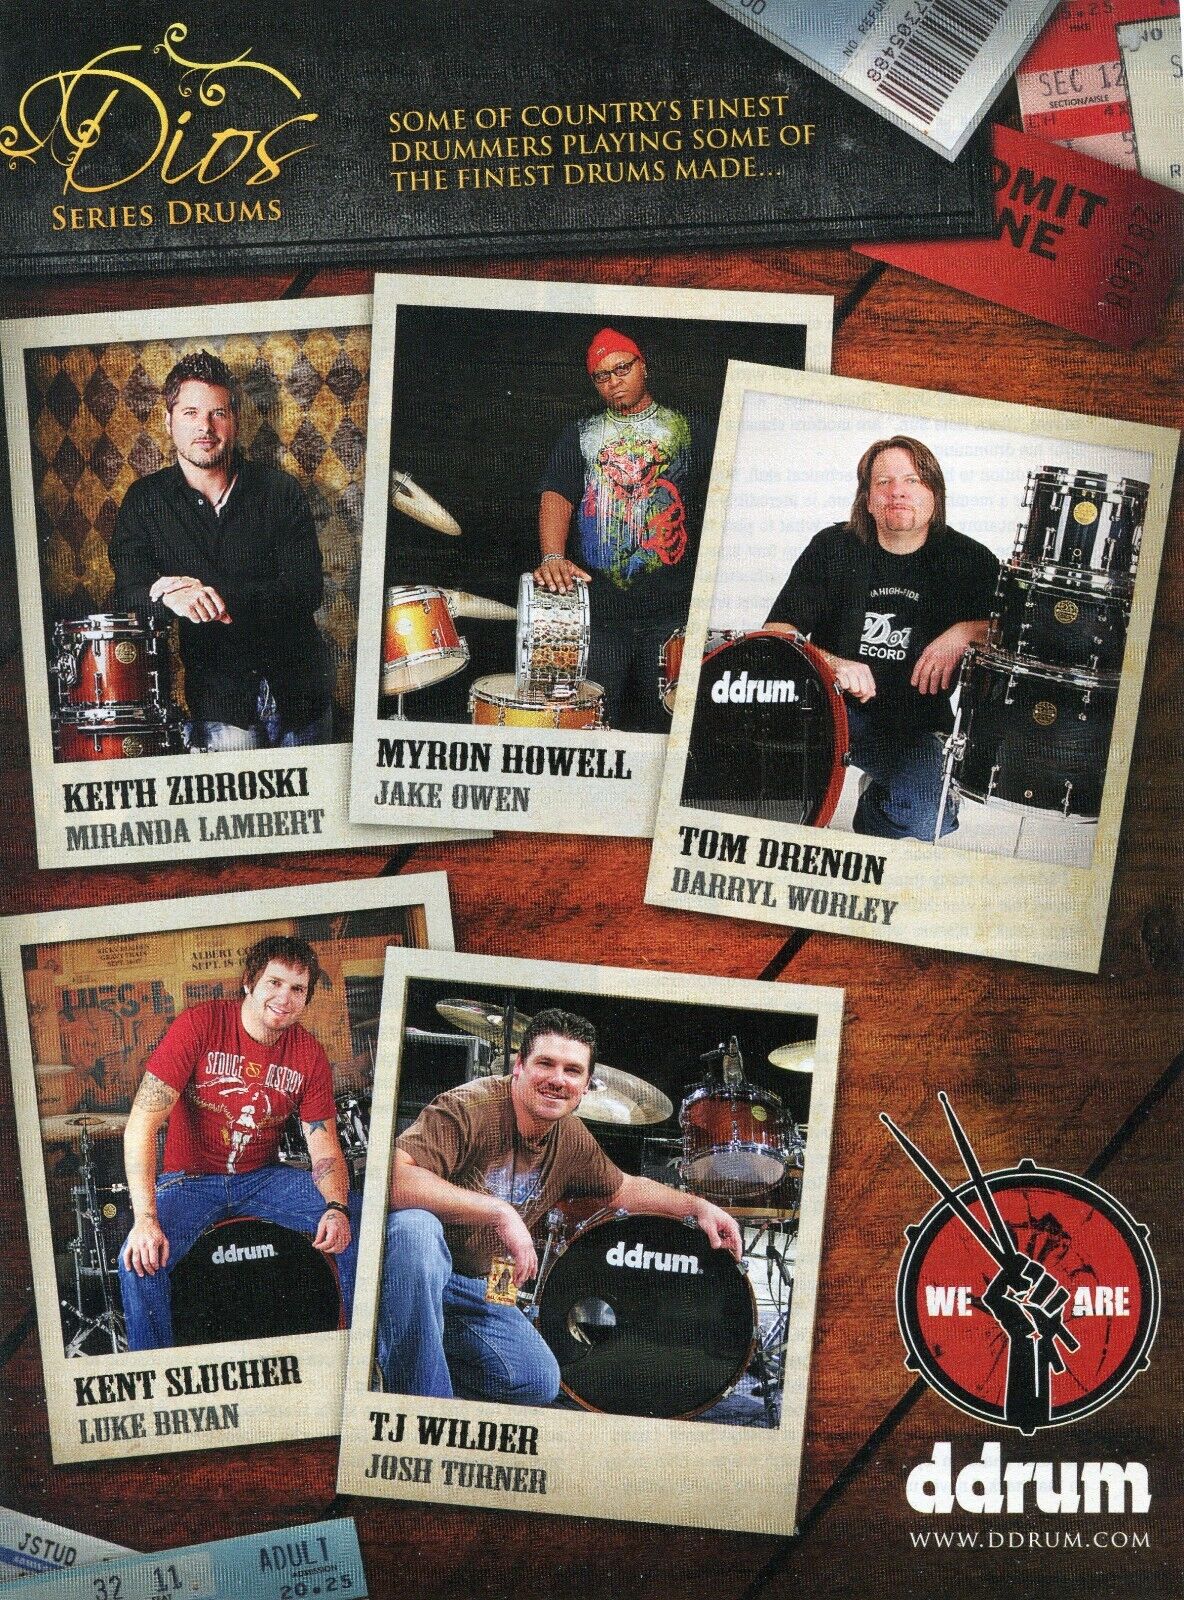 2009 Print Ad of ddrum Dios Series Drums w Kent Slucher TJ Wilder Keith Zibroski